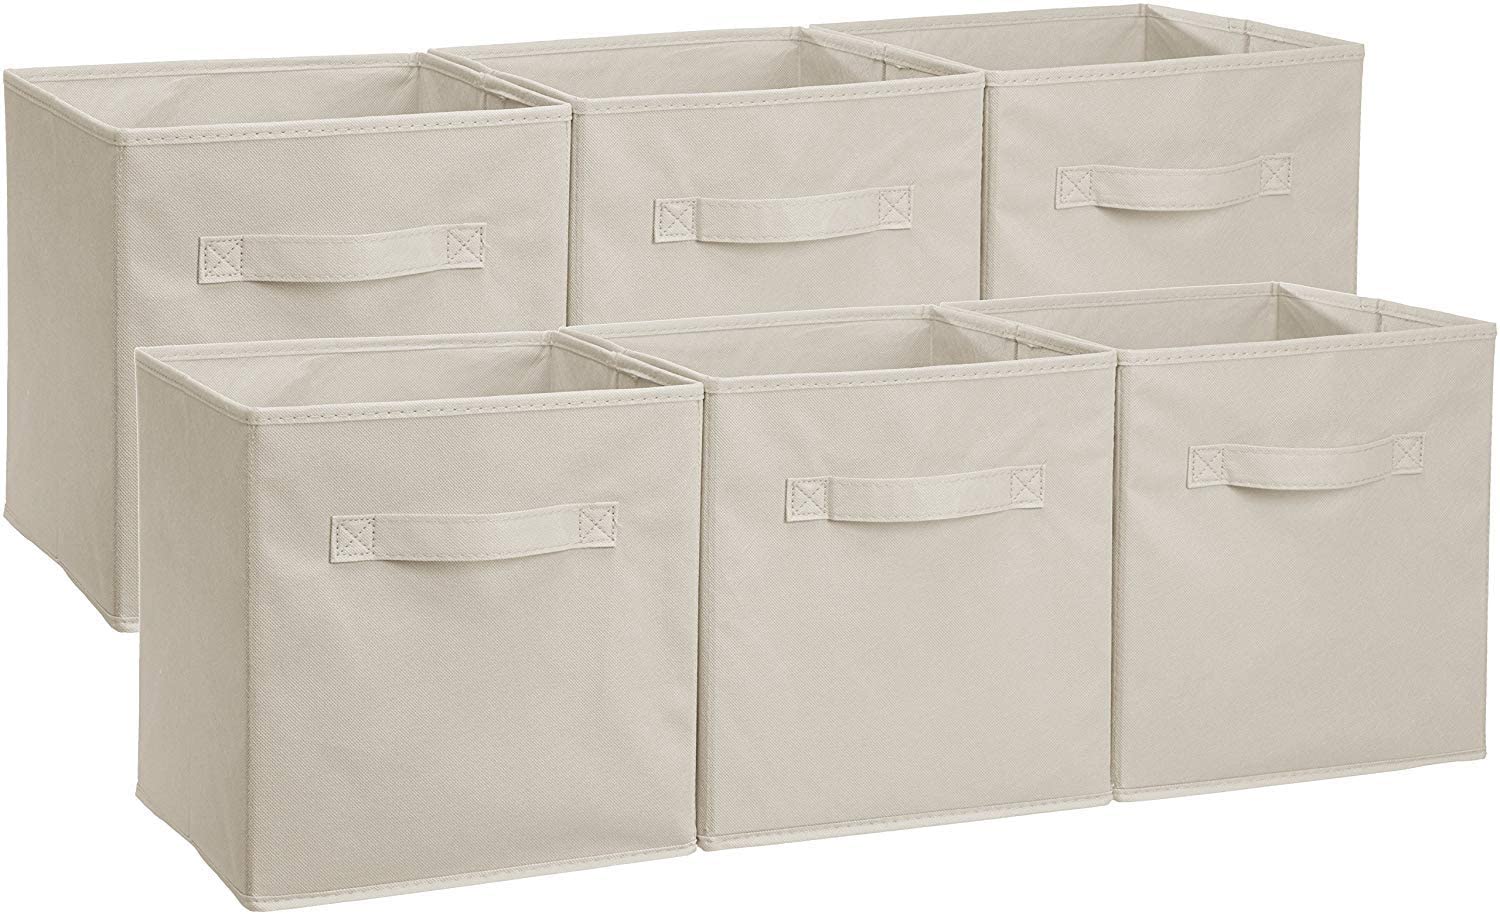 AmazonBasics Collapsible Fabric Storage Cubes, 6-Pack